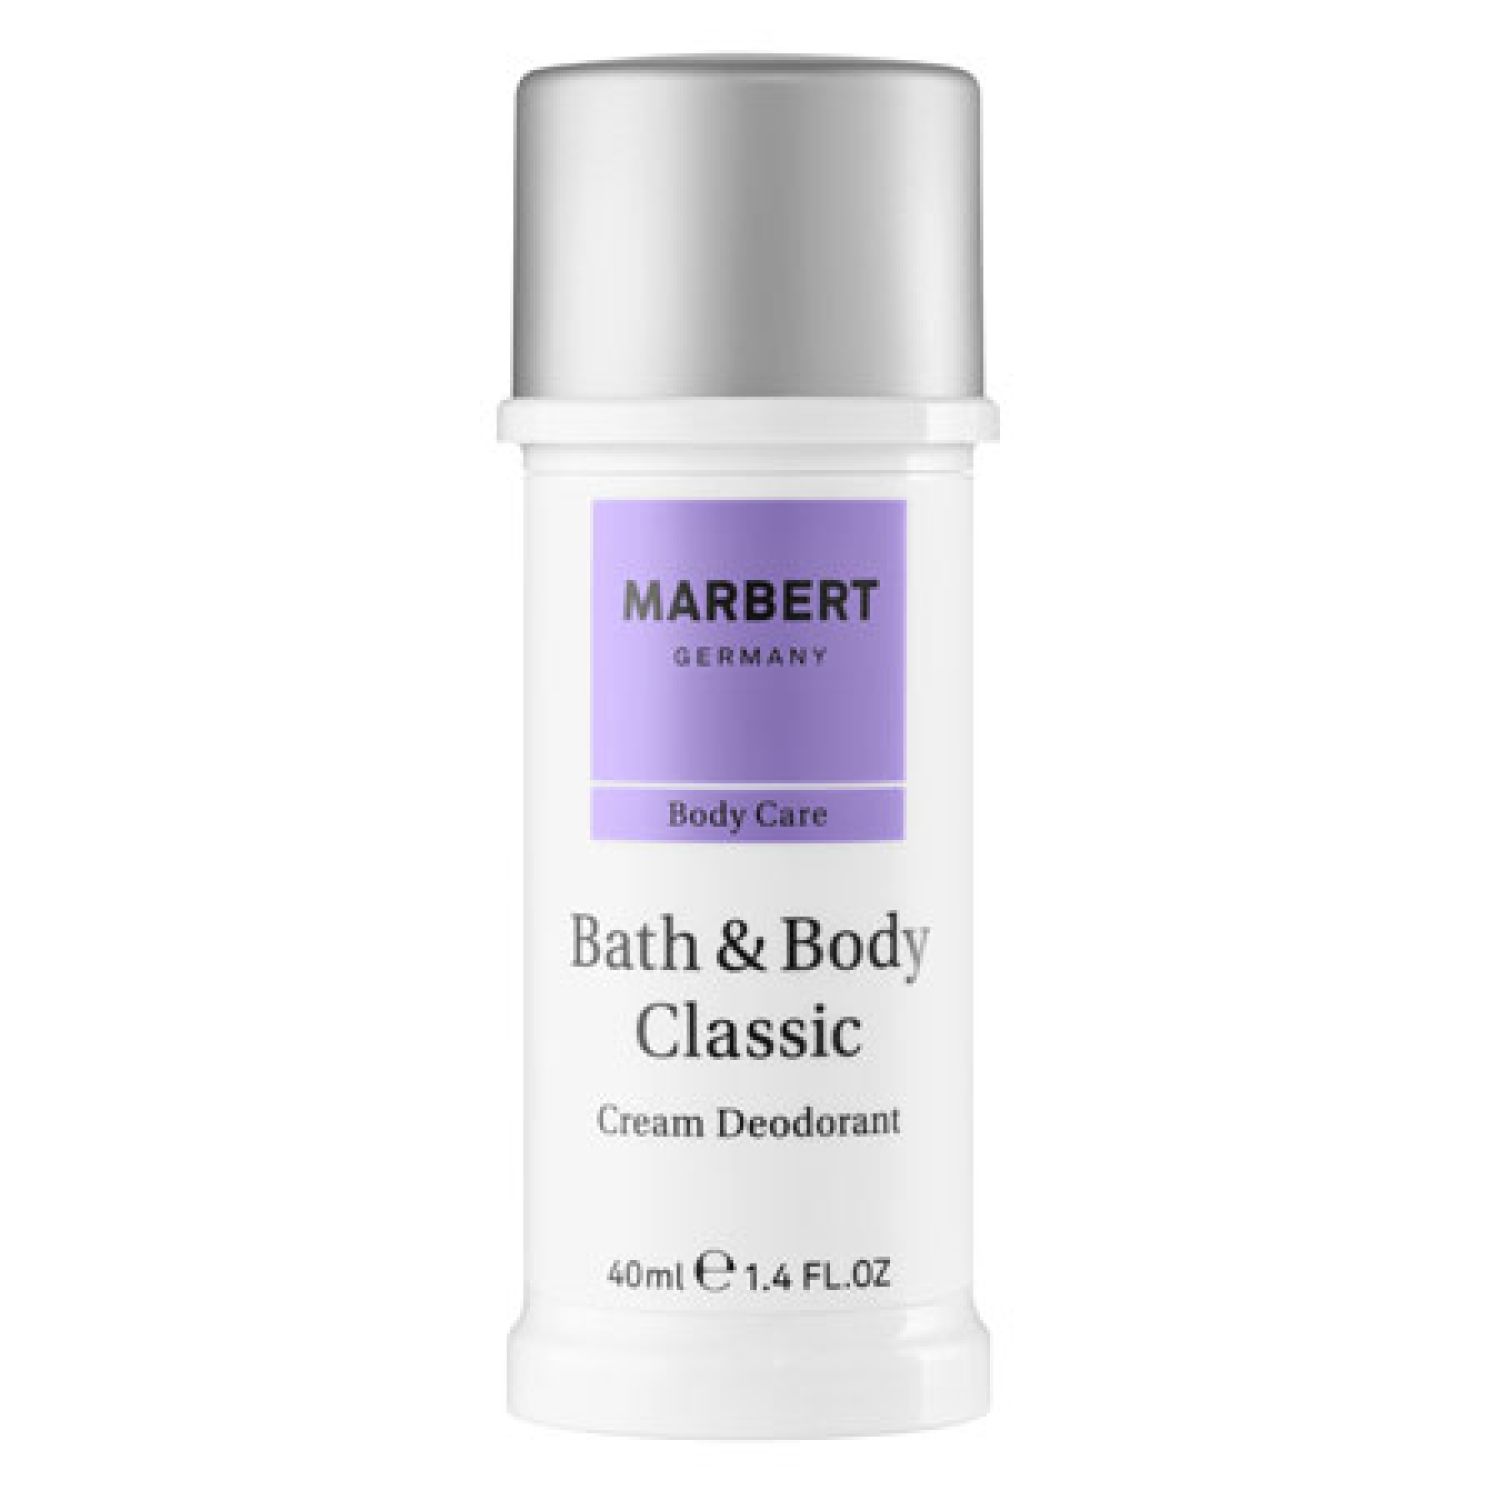 Marbert Bath & Body CLASSIC Cream Deodorant